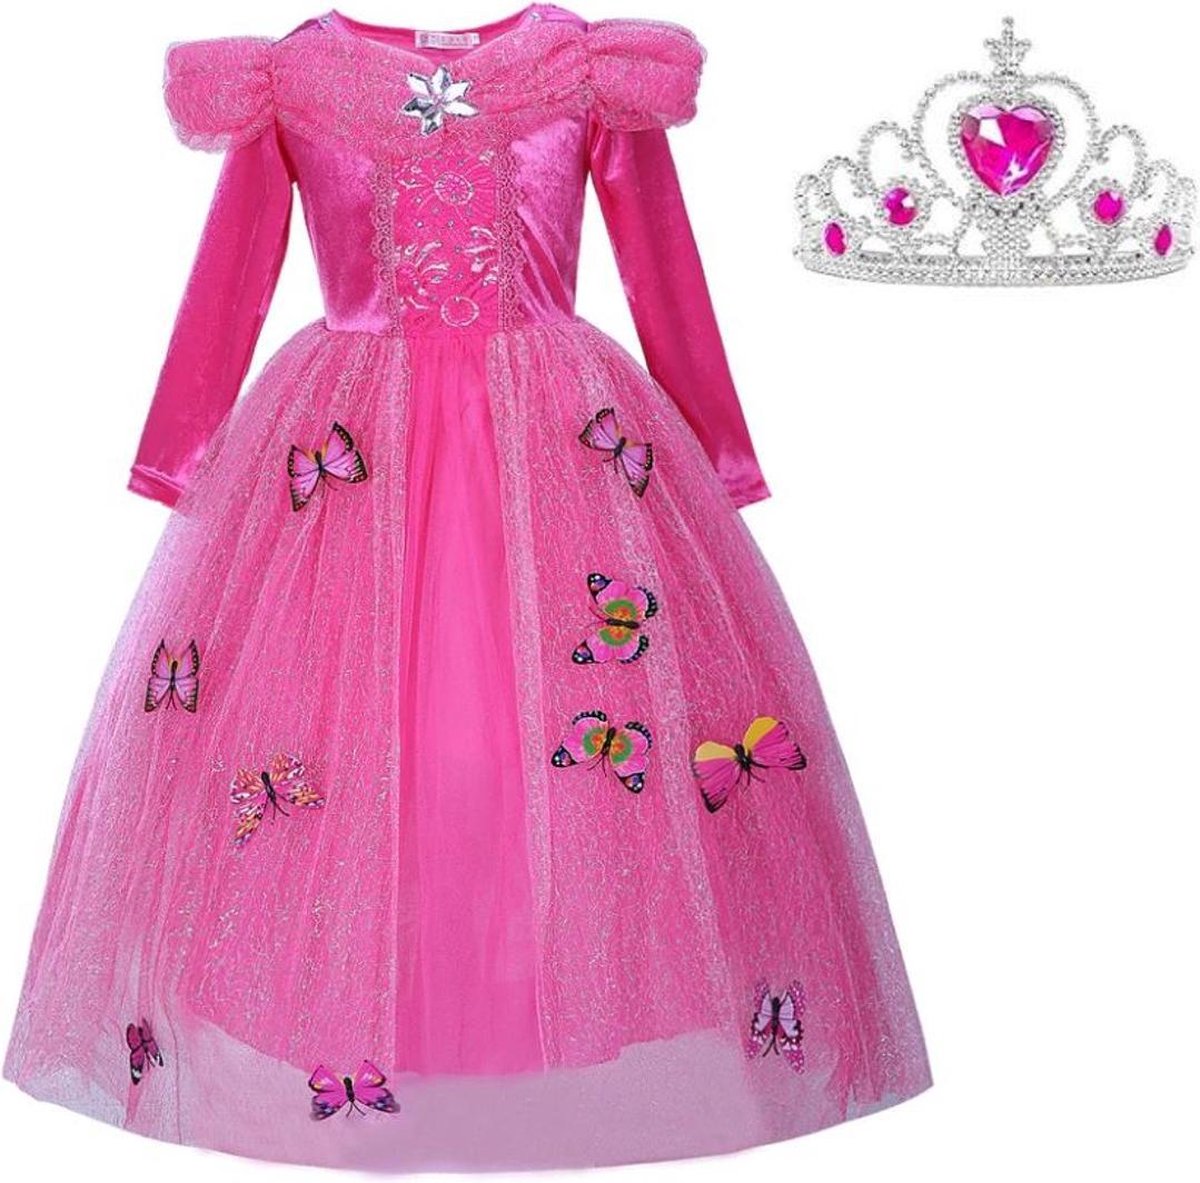 Doornroosje jurk Prinsessen jurk verkleedjurk 116-122 (120) fel roze Luxe met vlinders + kroon verkleedkleding meisje